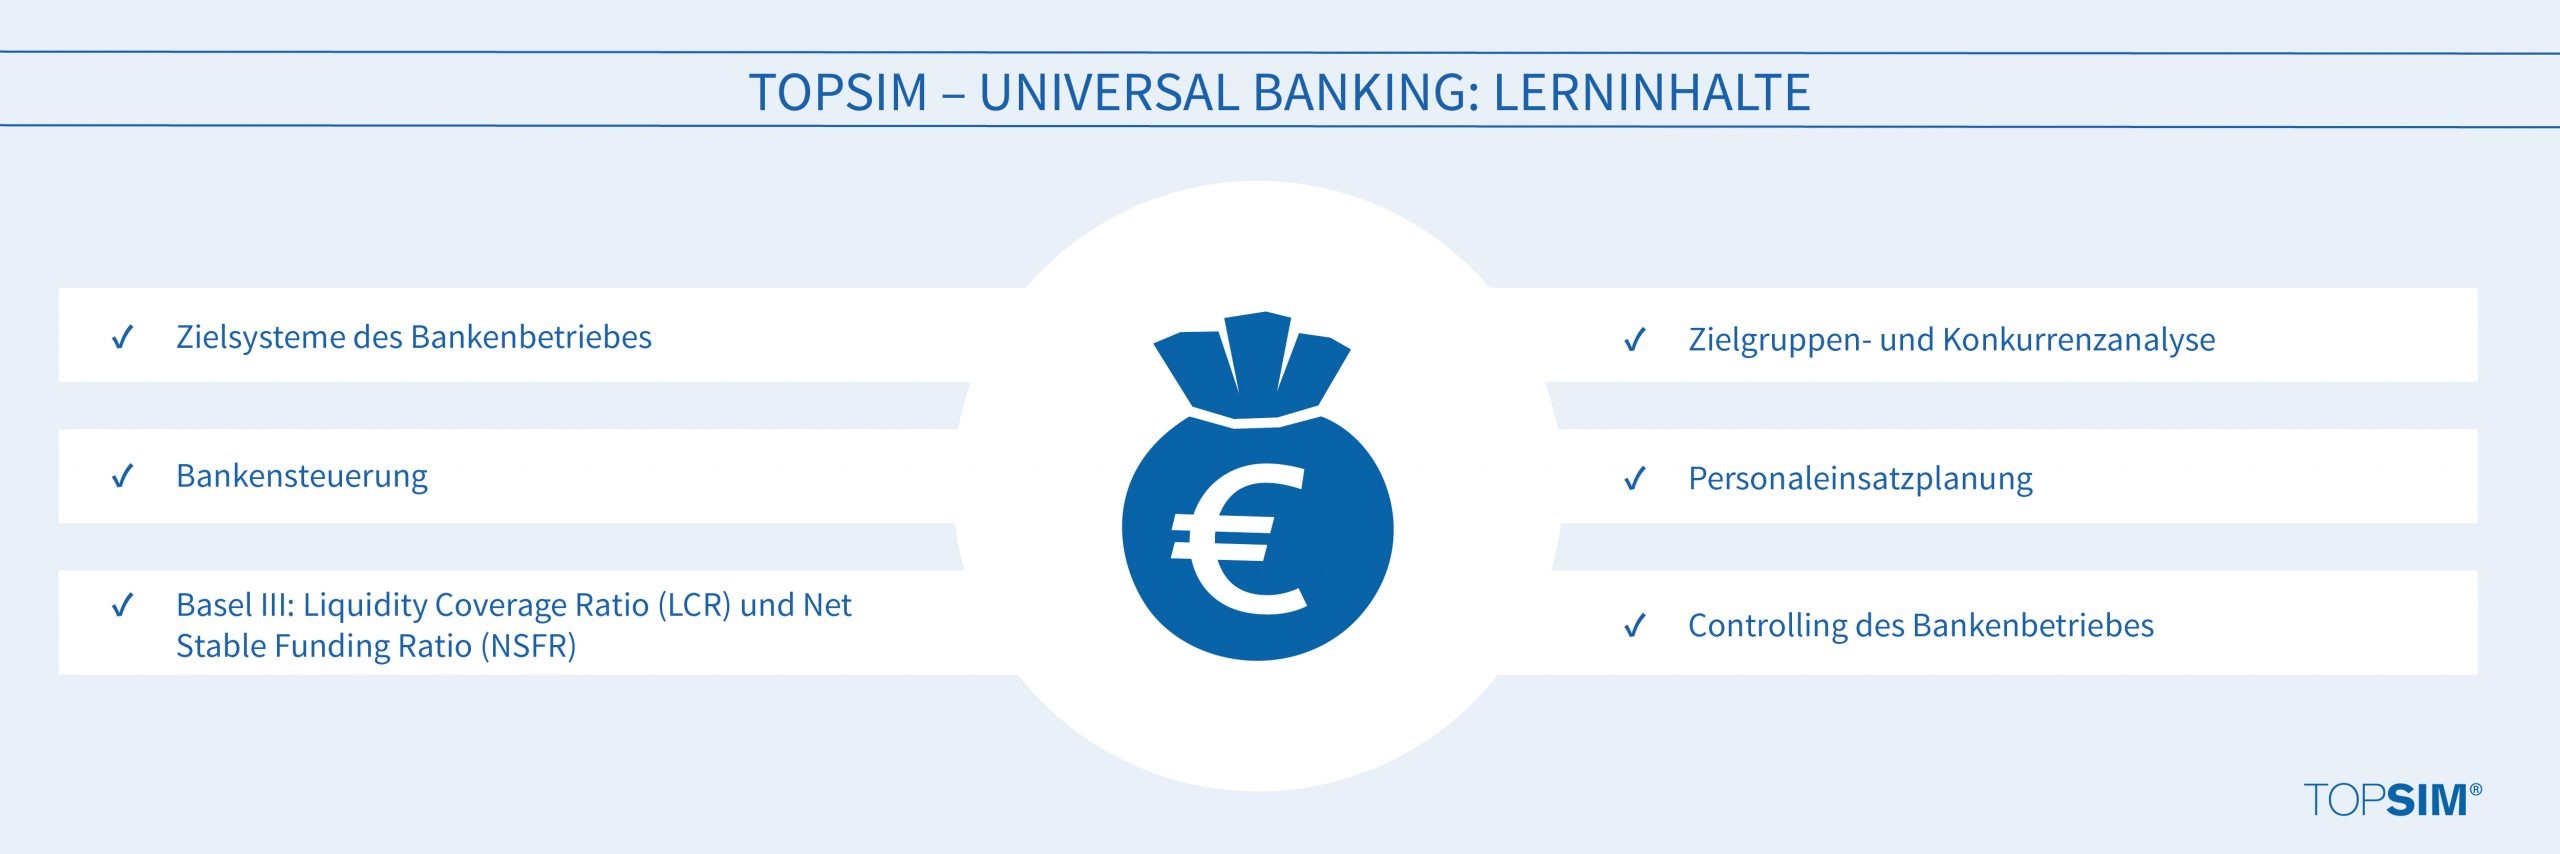 Lerninhalte TOPSIM – Universal Banking